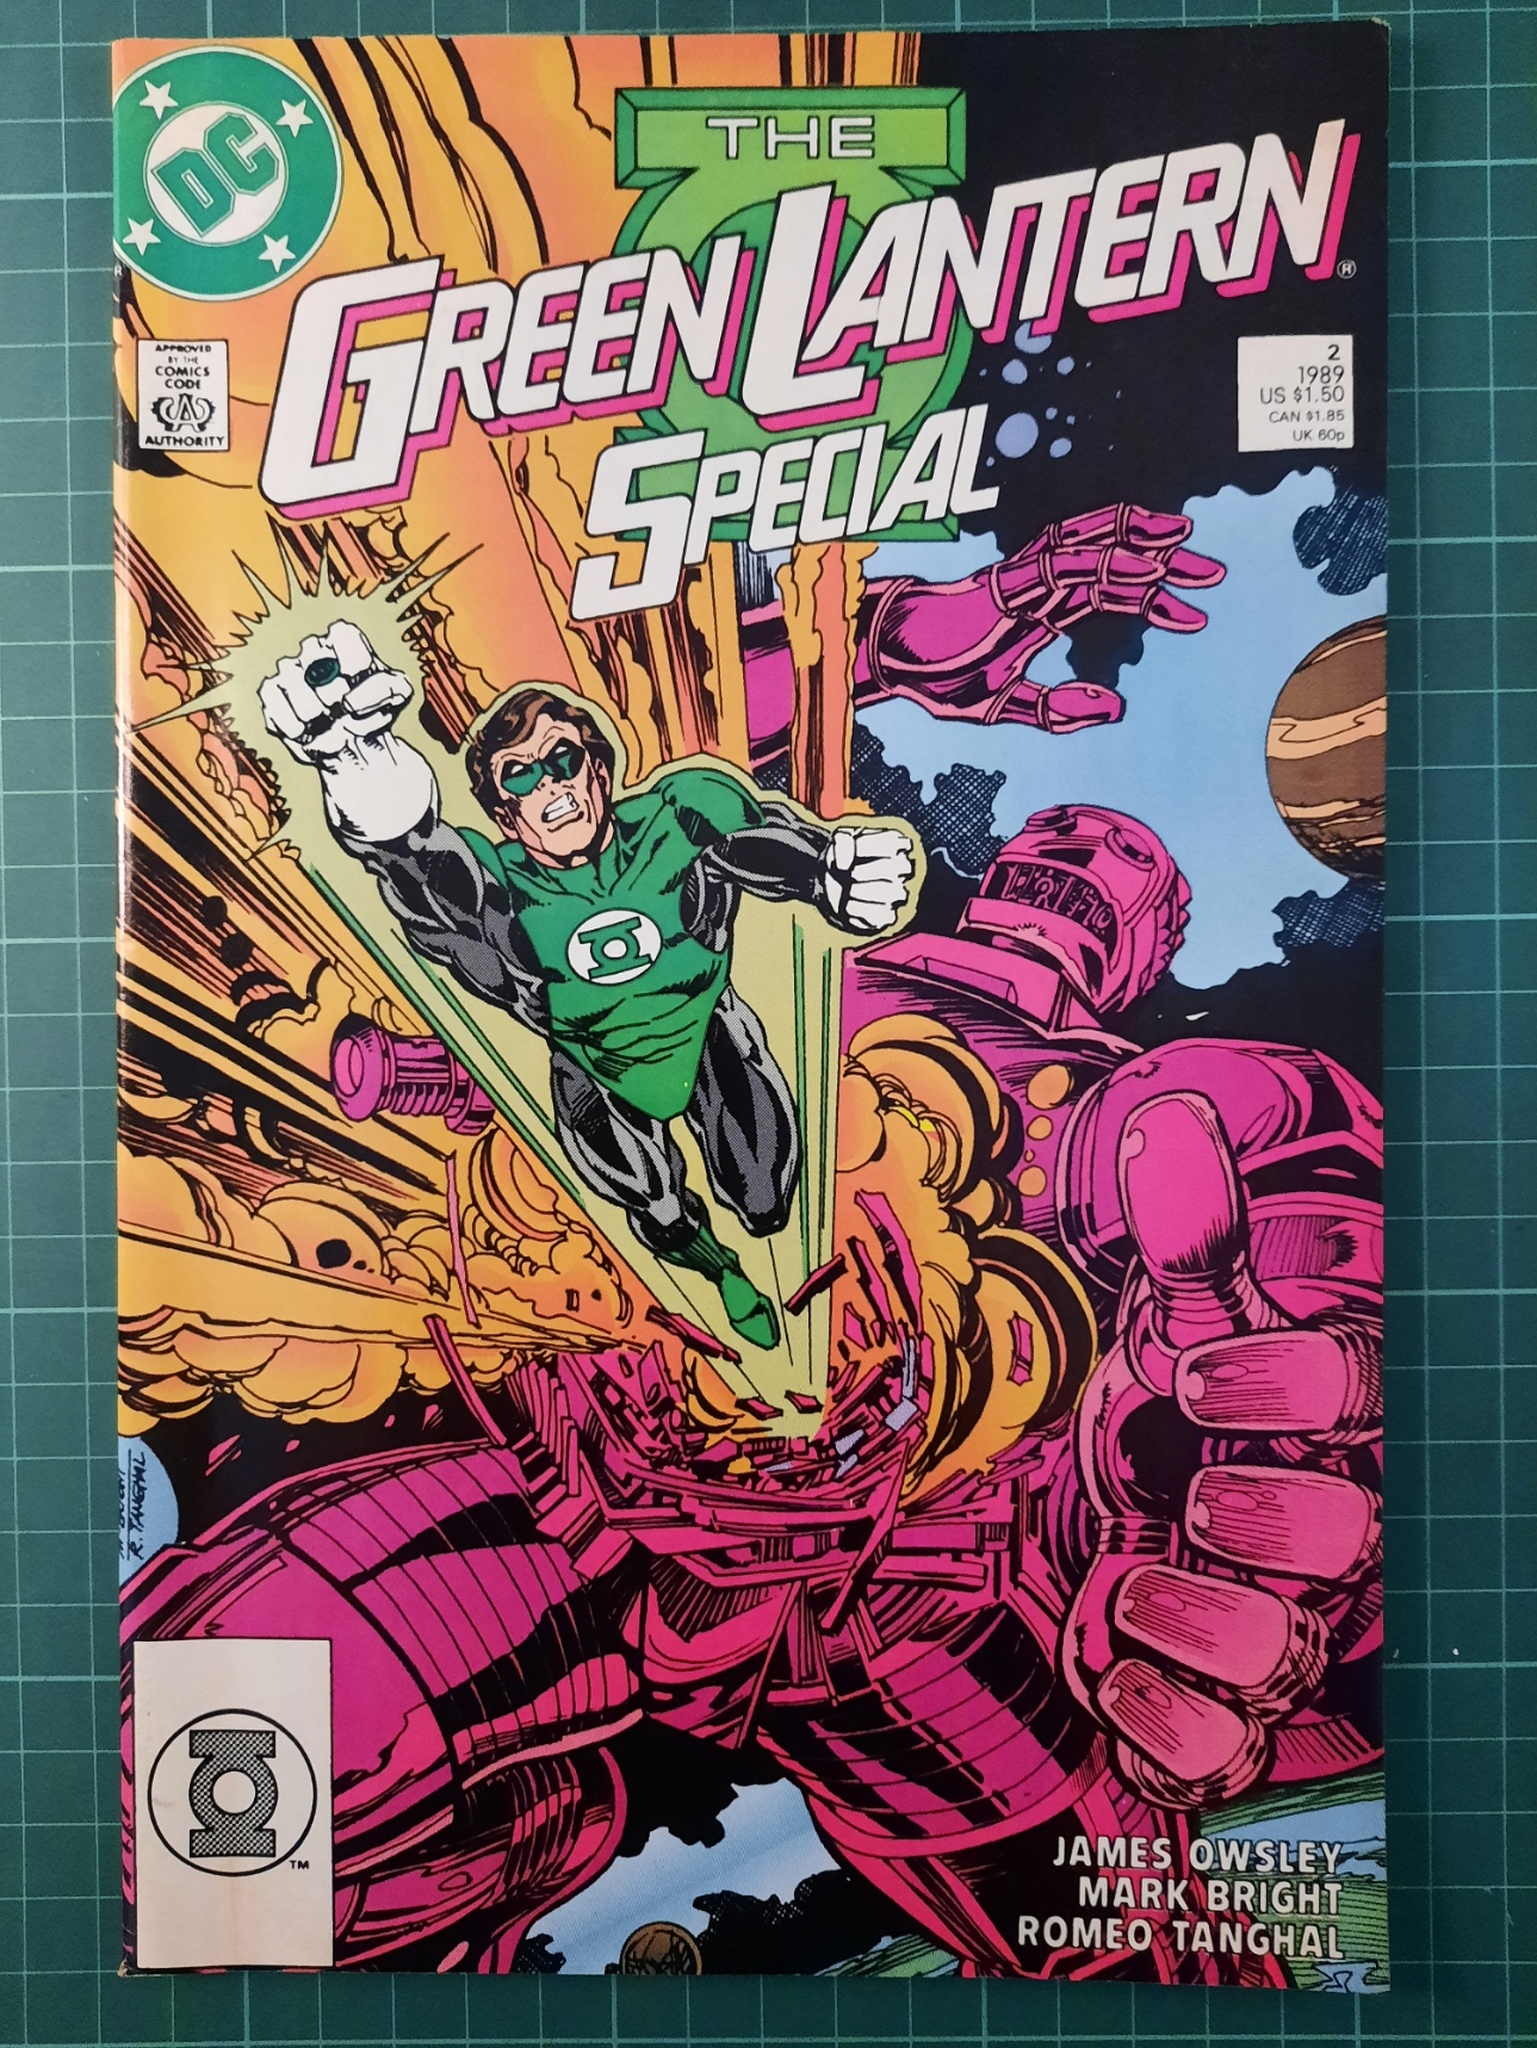 Green Lantern special #2